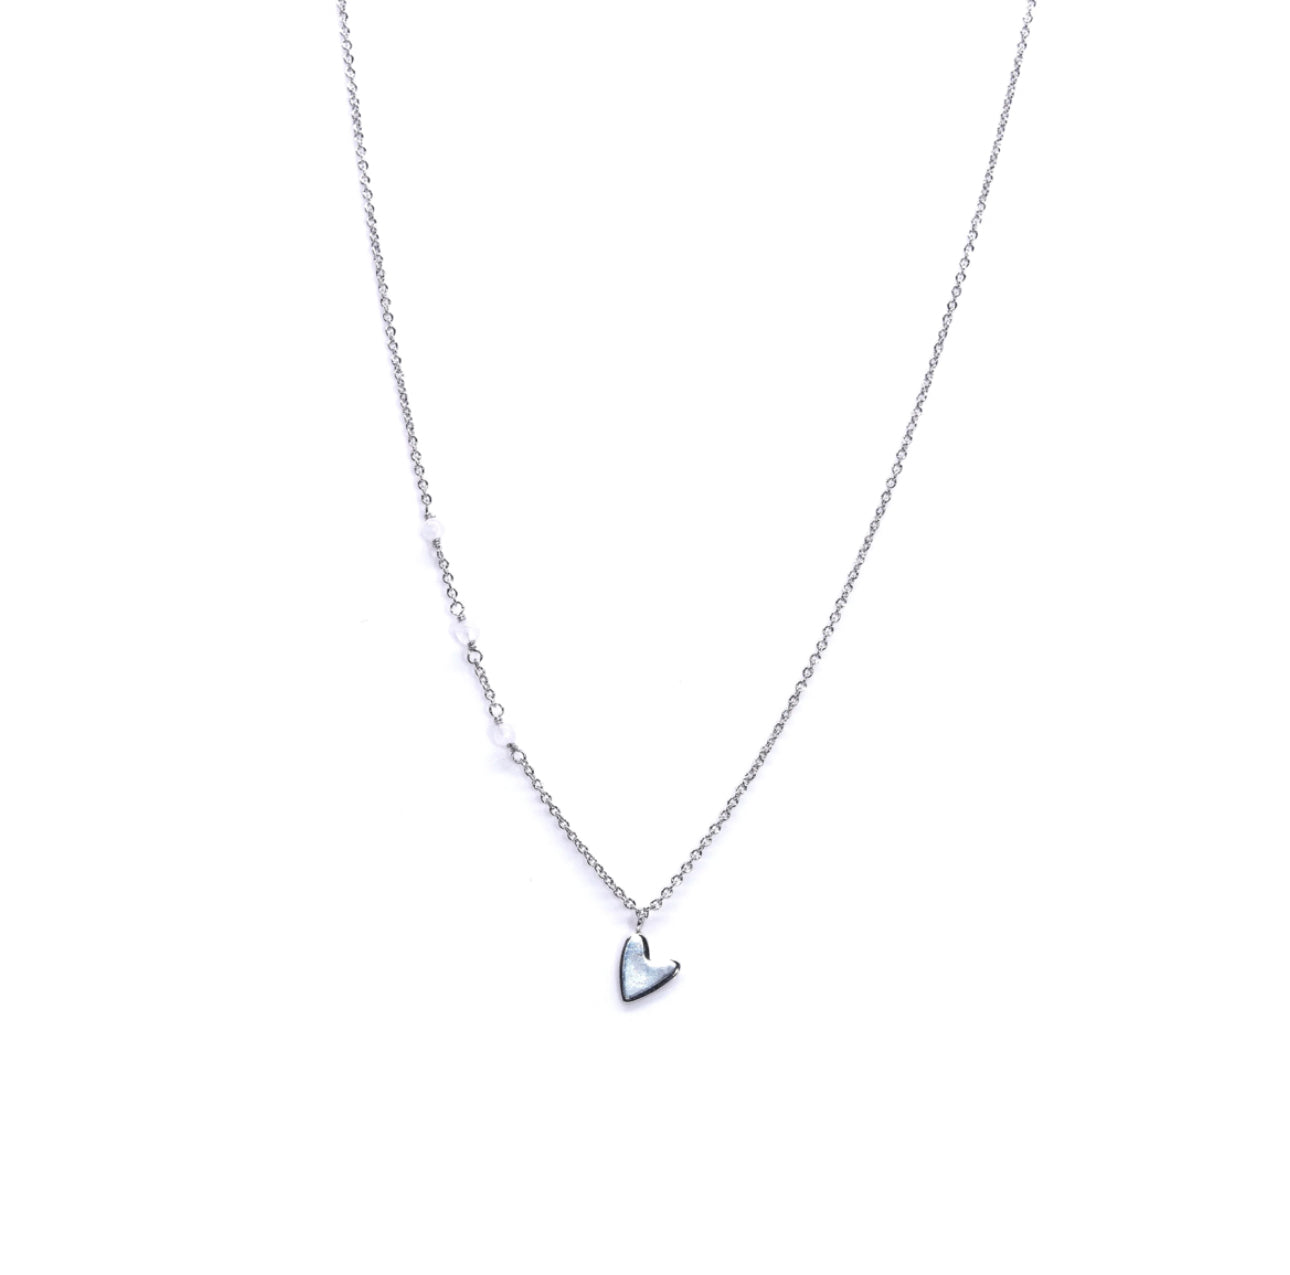 eLiasz & eLLa / Silver Little Heart Necklace